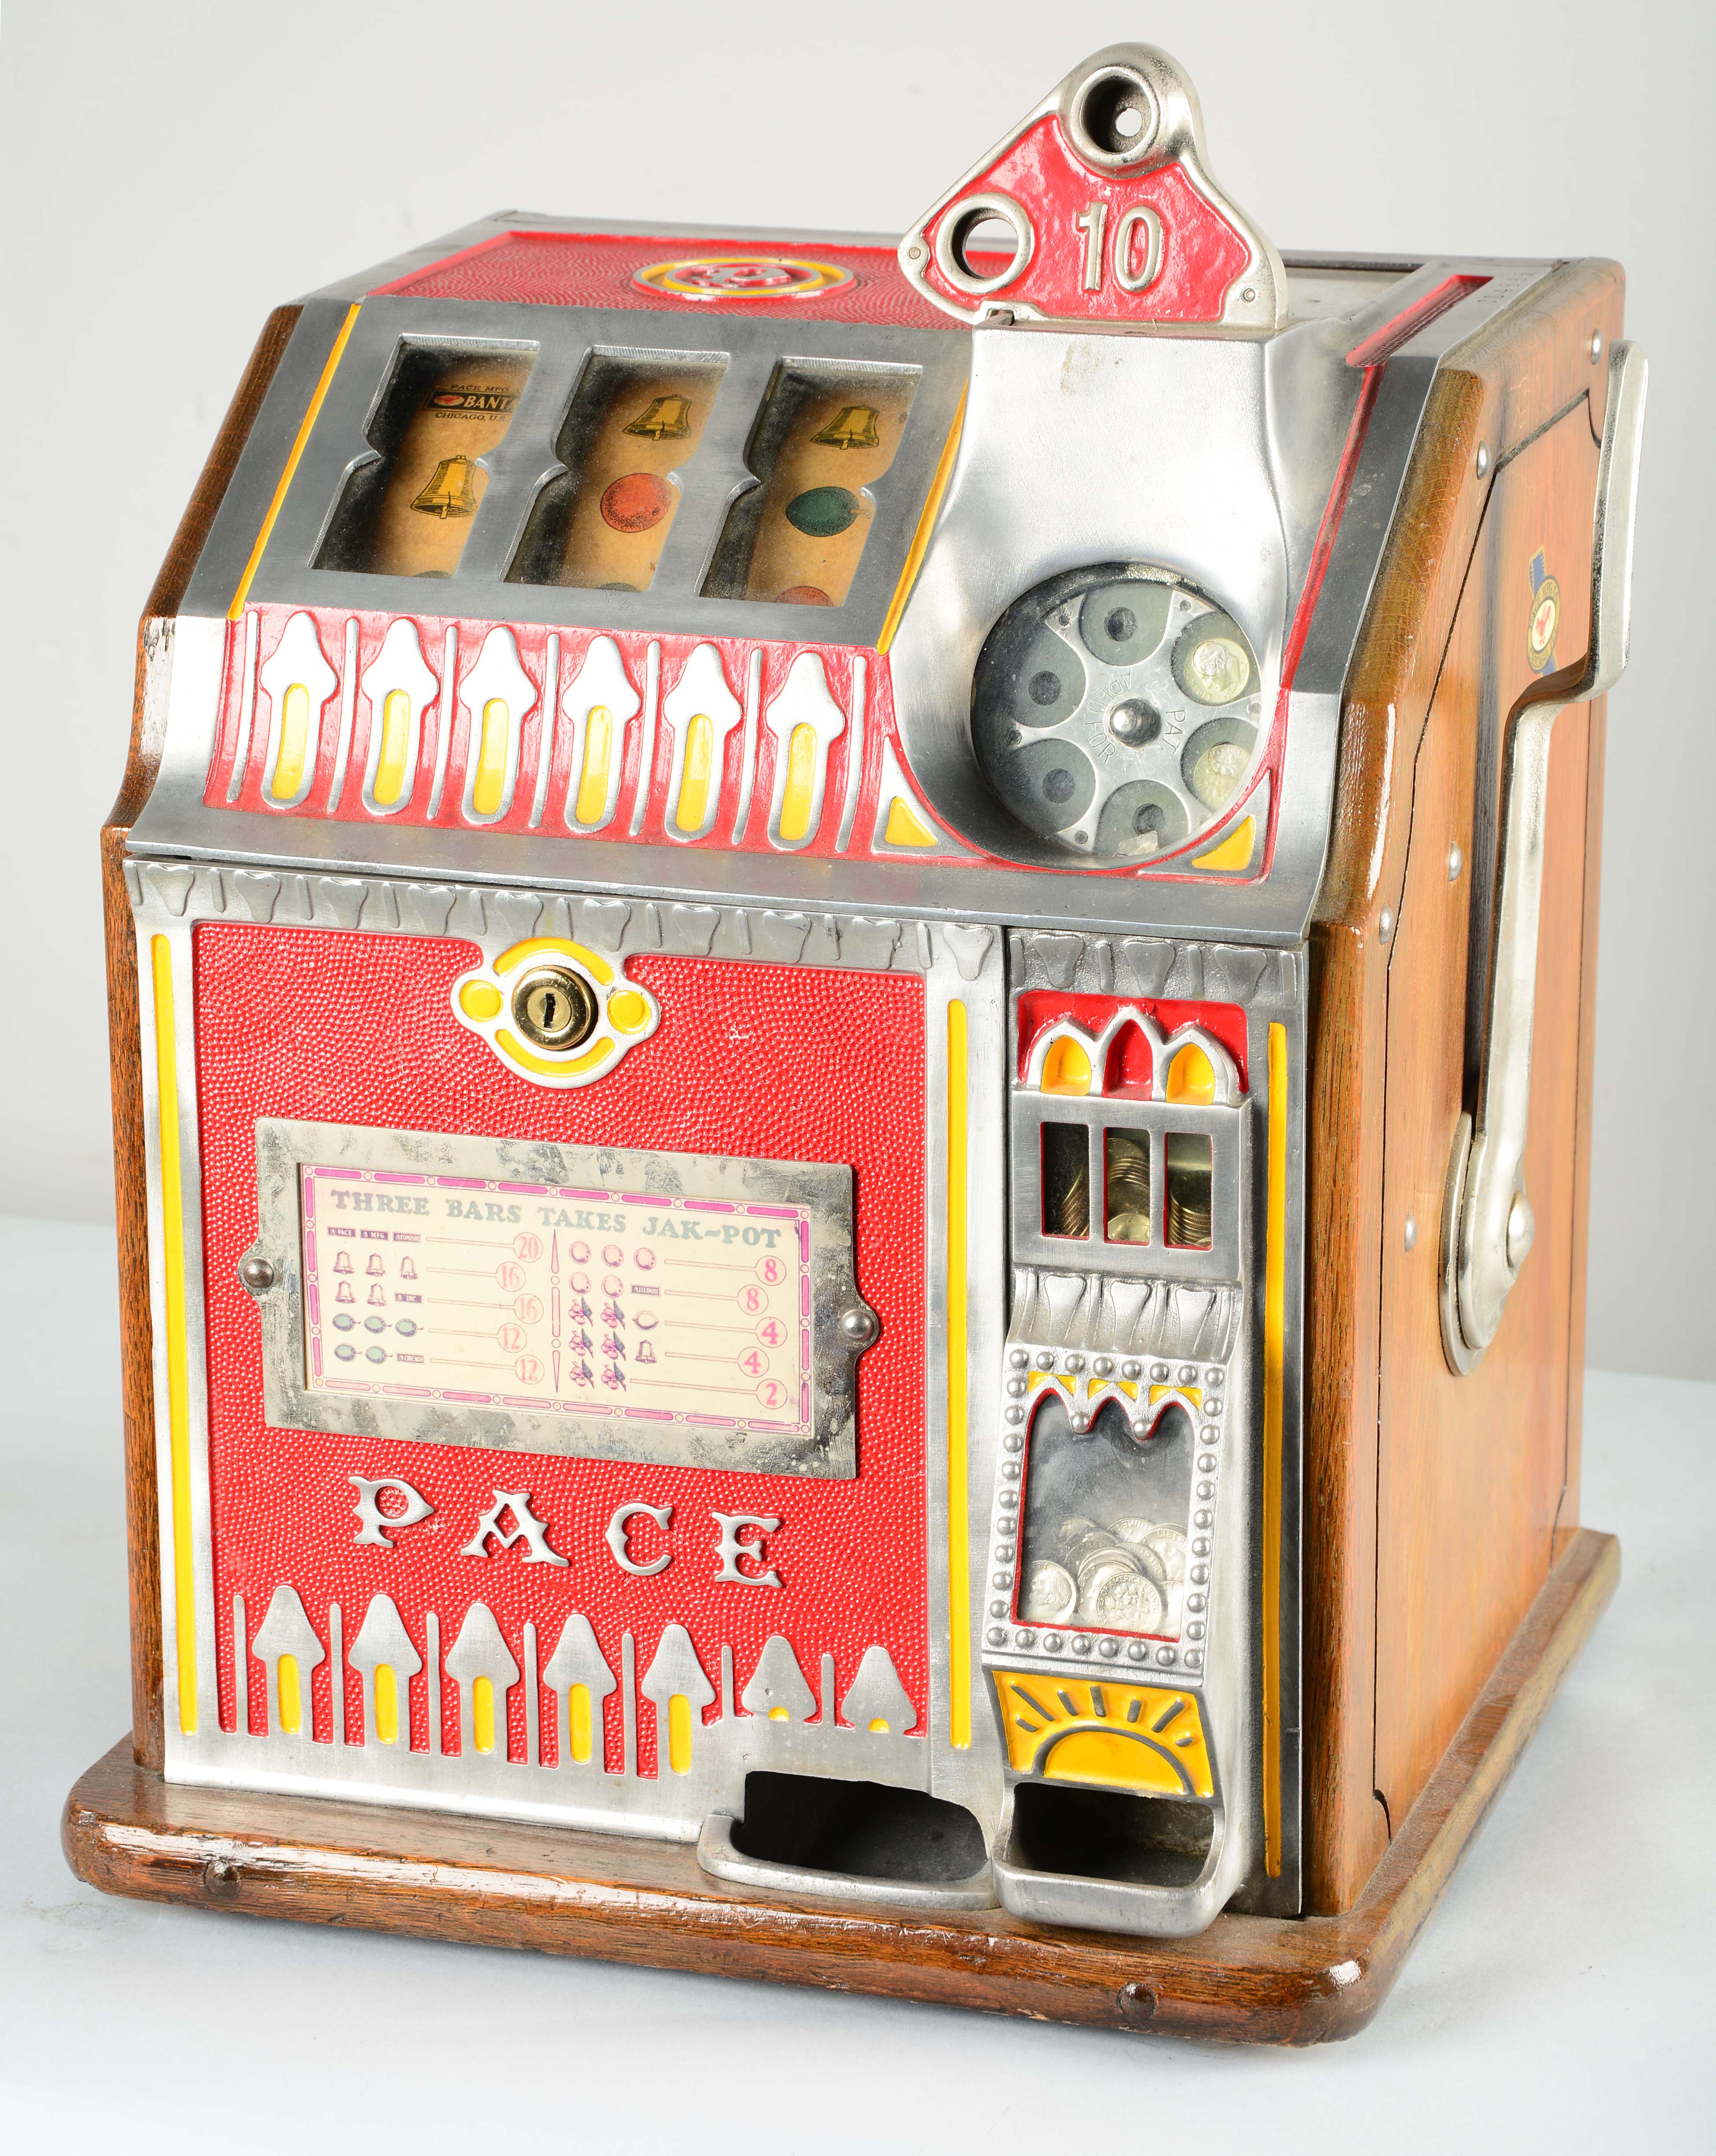 pace slot machine mla 2502 5 cents